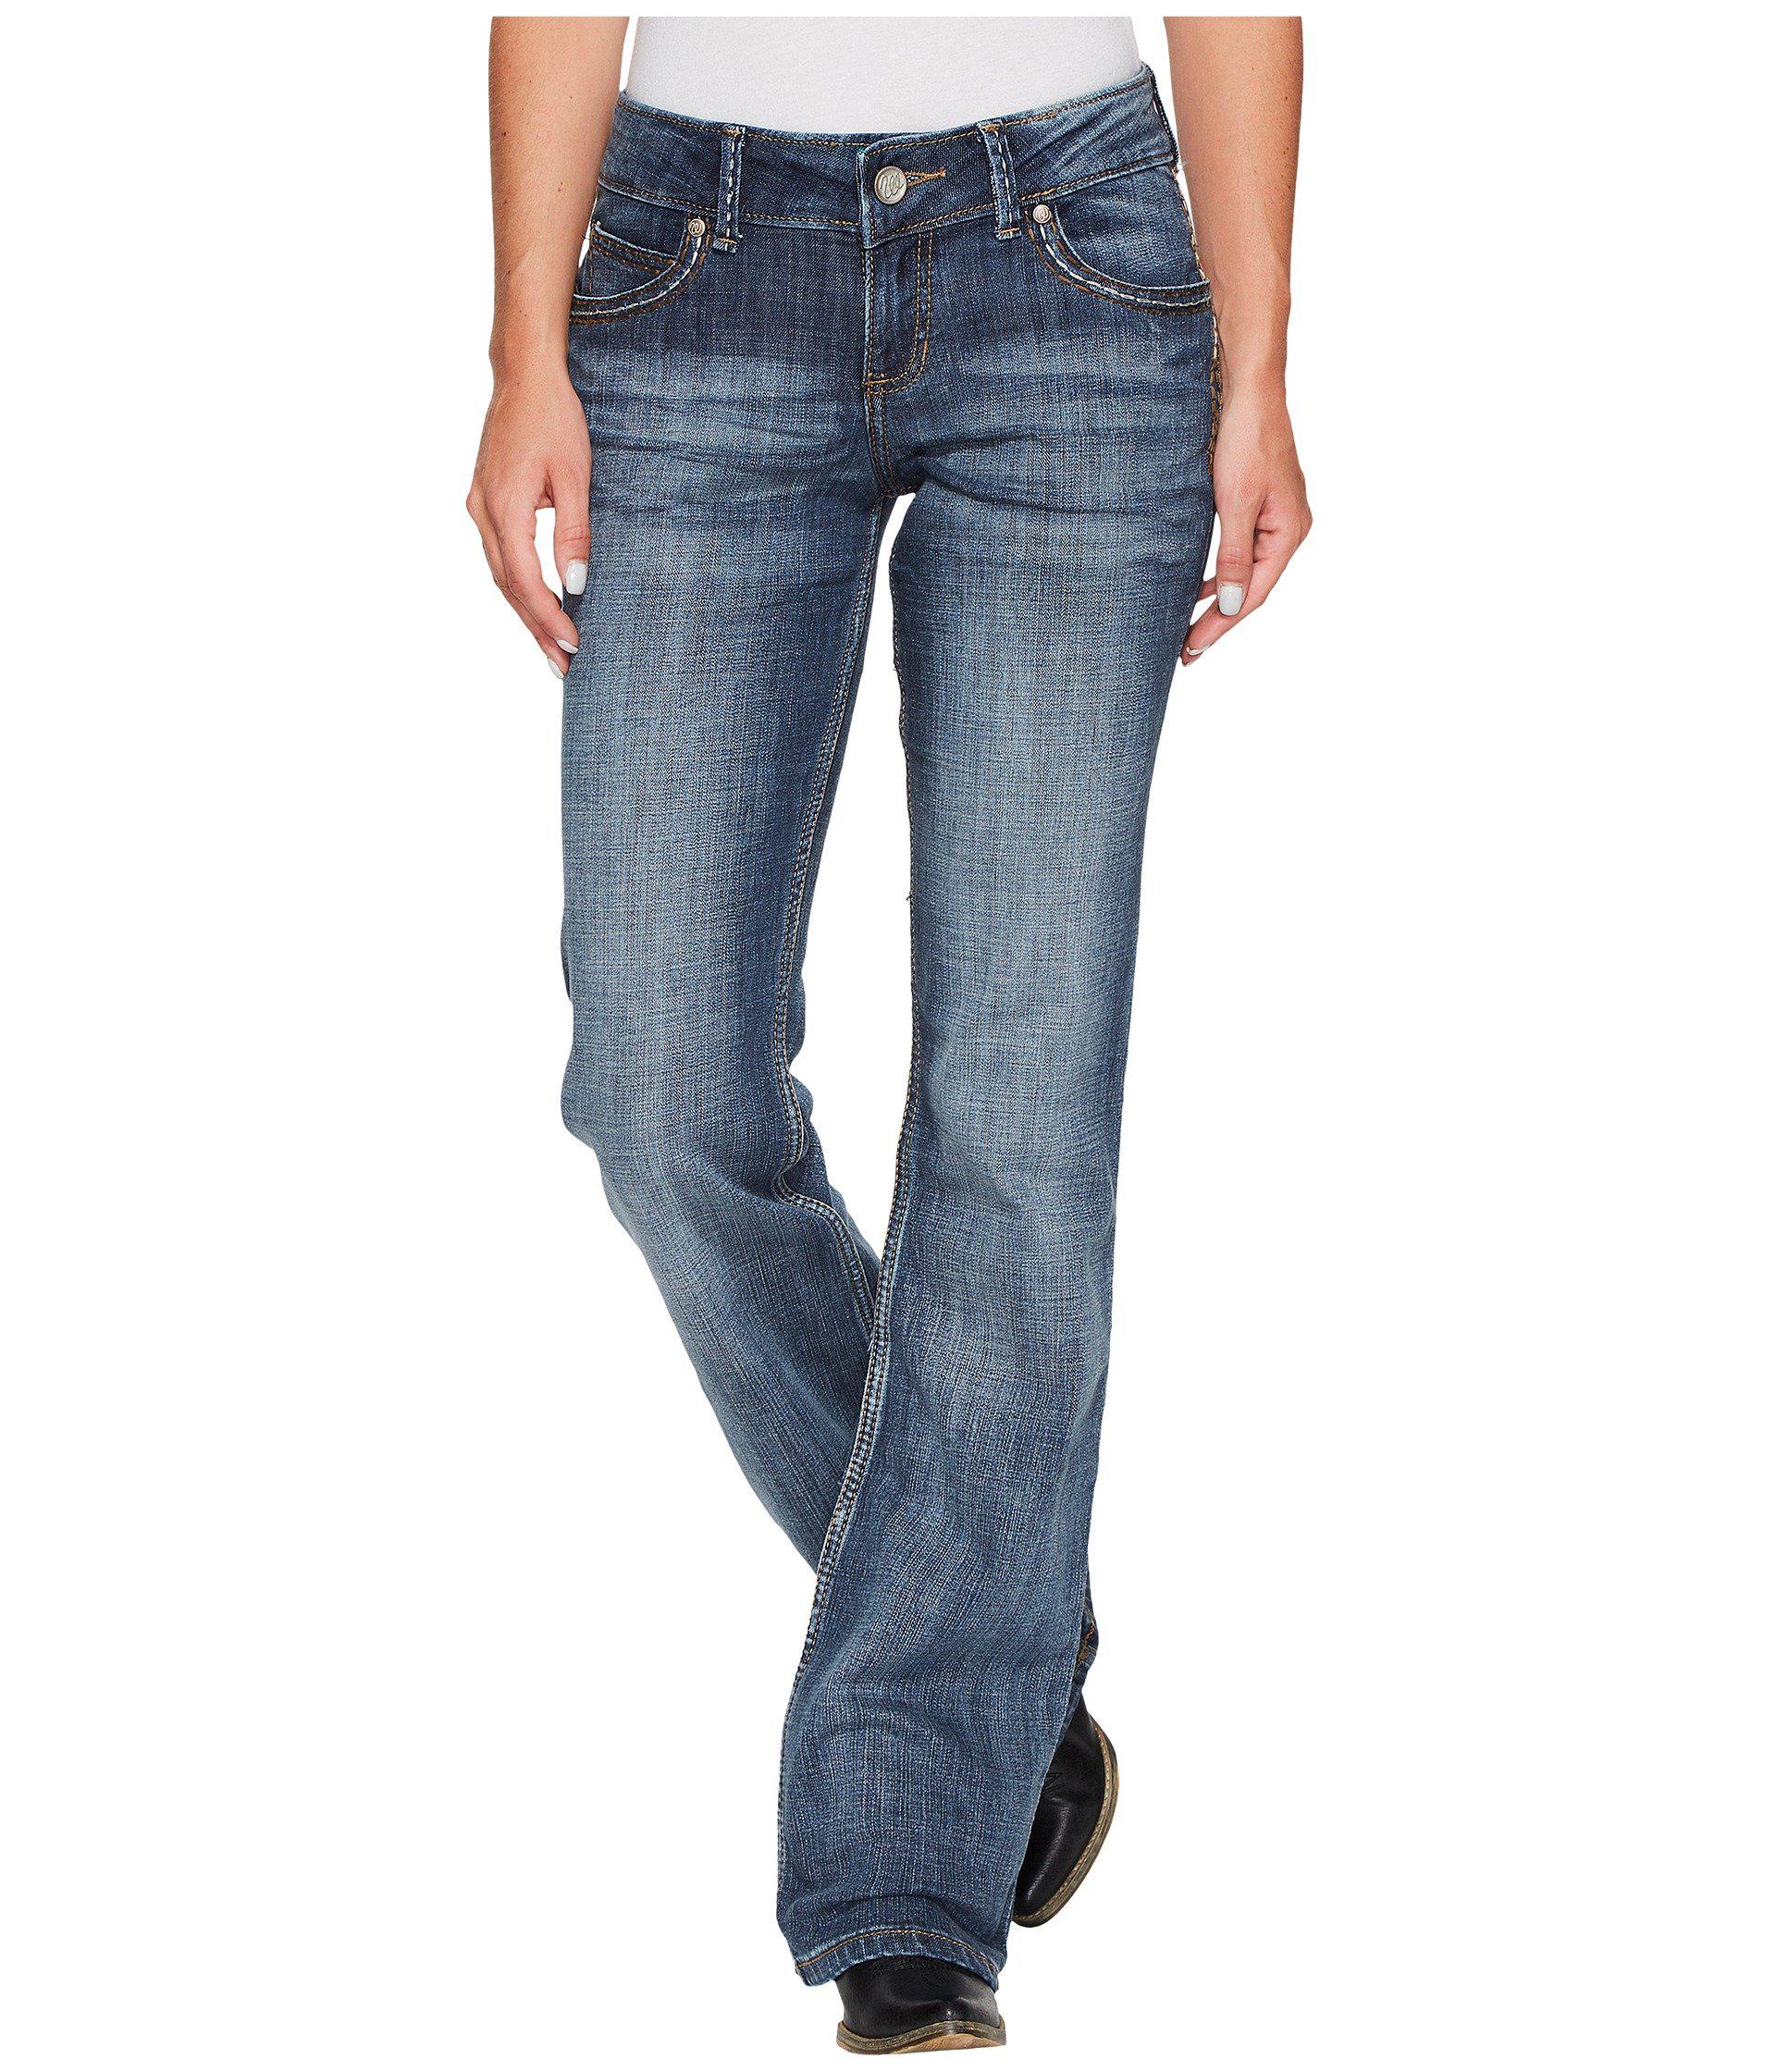 Lyst - Wrangler Retro Sadie Low Rise (mid Wash) Women's Jeans in Blue